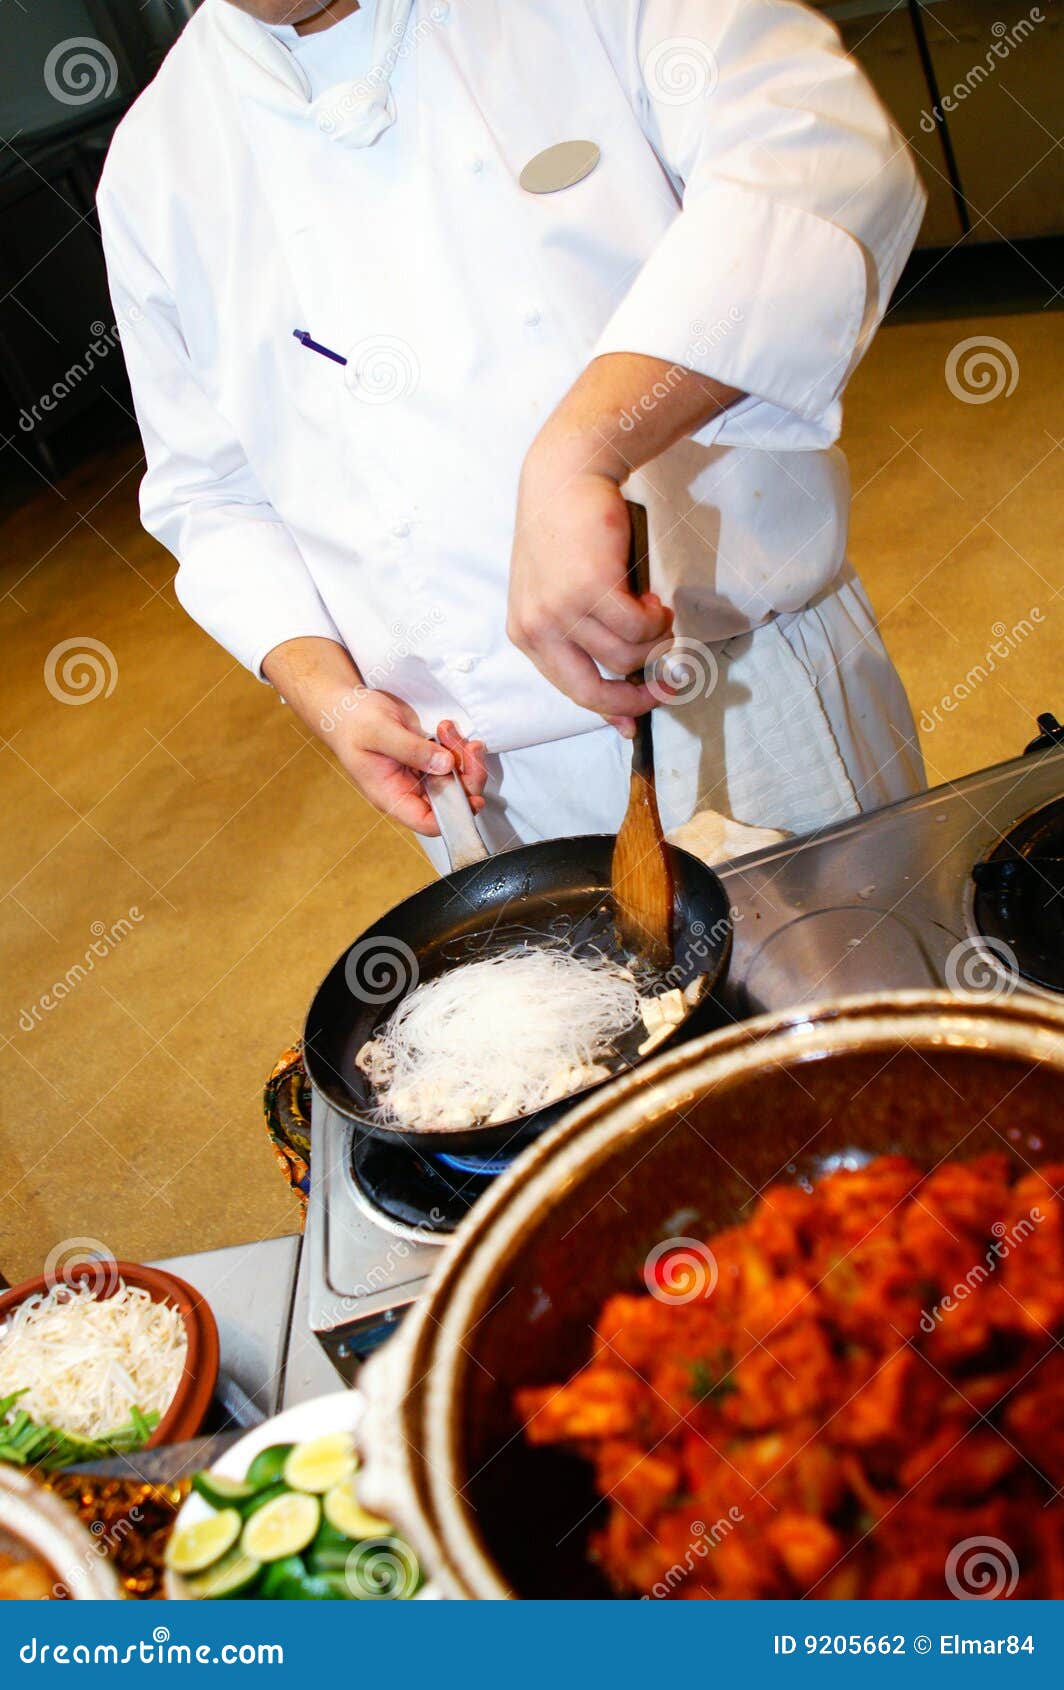 professional chef preparing dishes